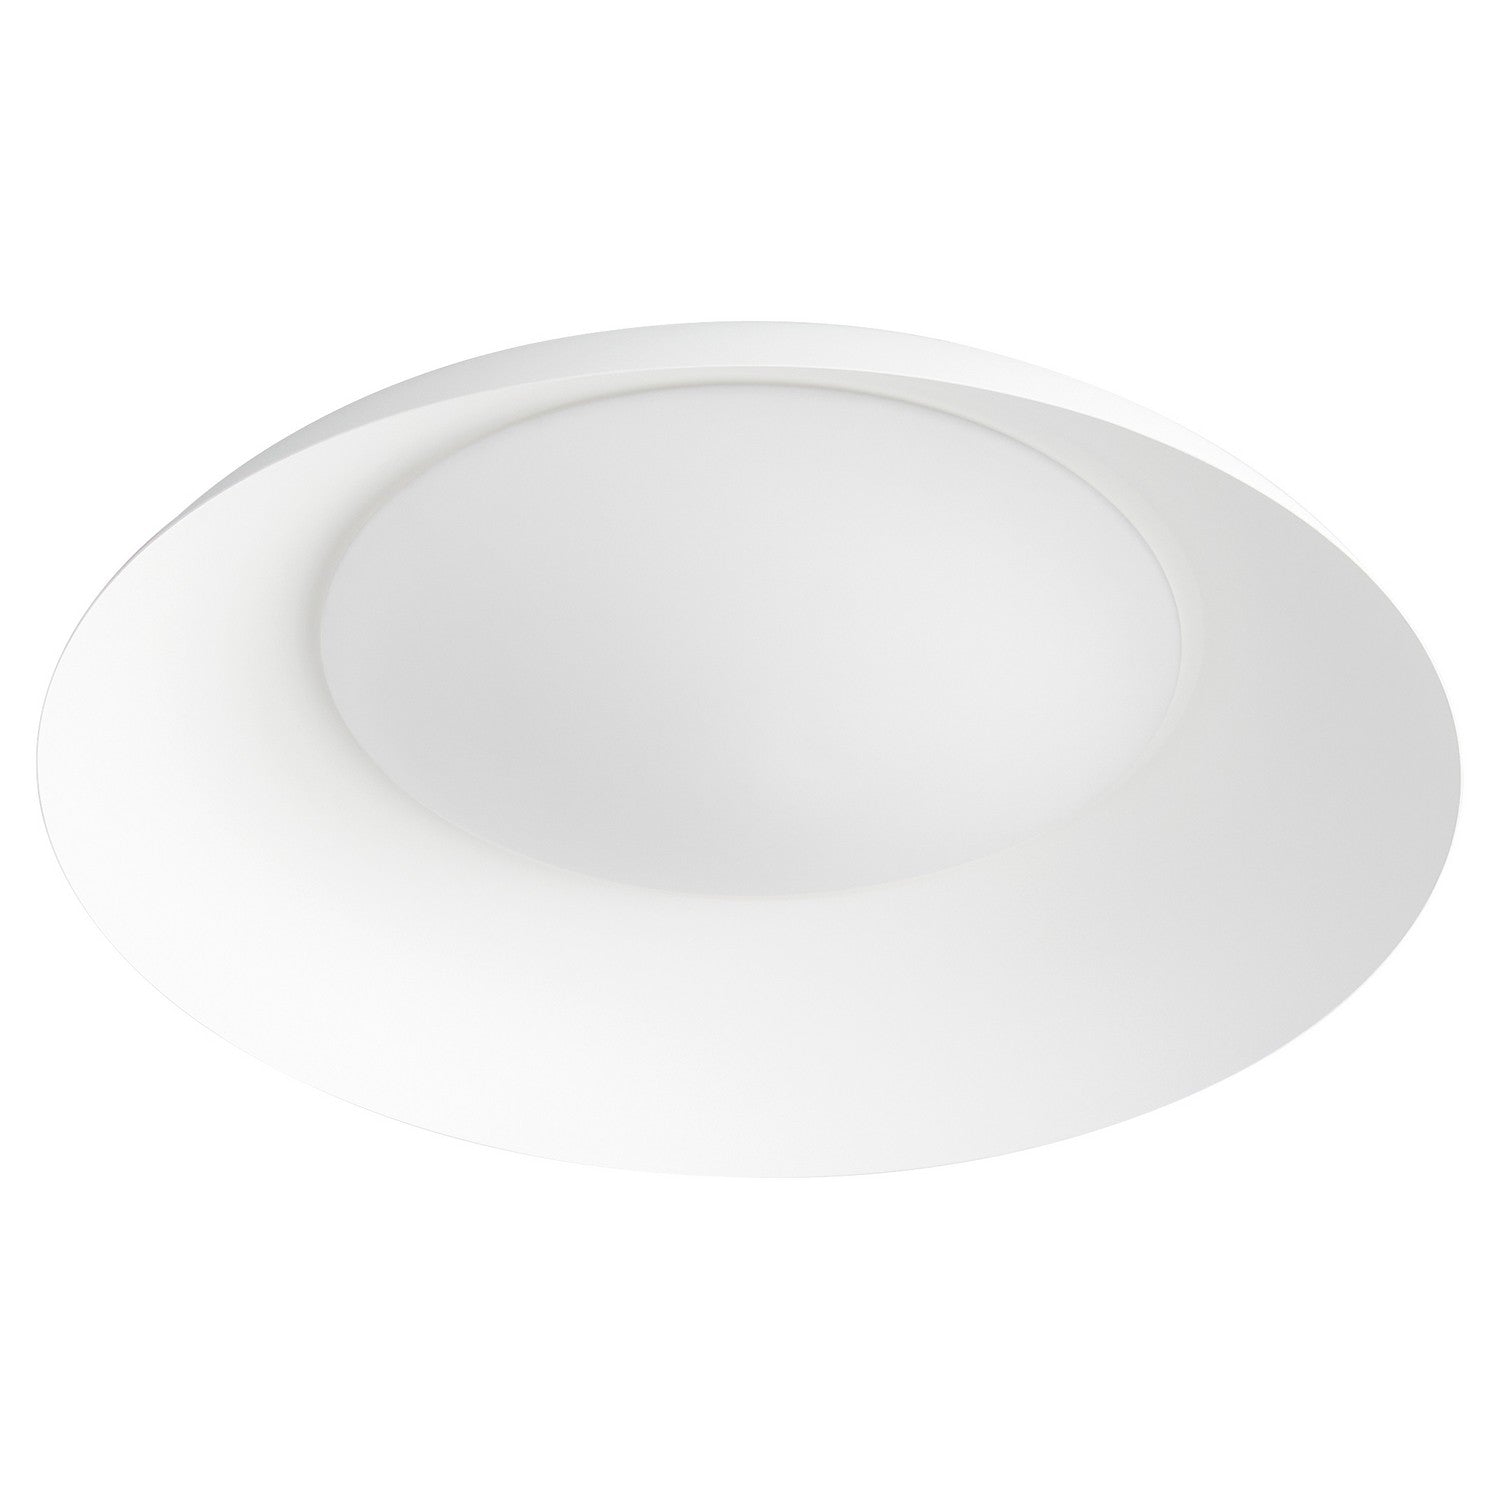 Oxygen Bongo 3-679-6 Flush Ceiling Light Fixture - White